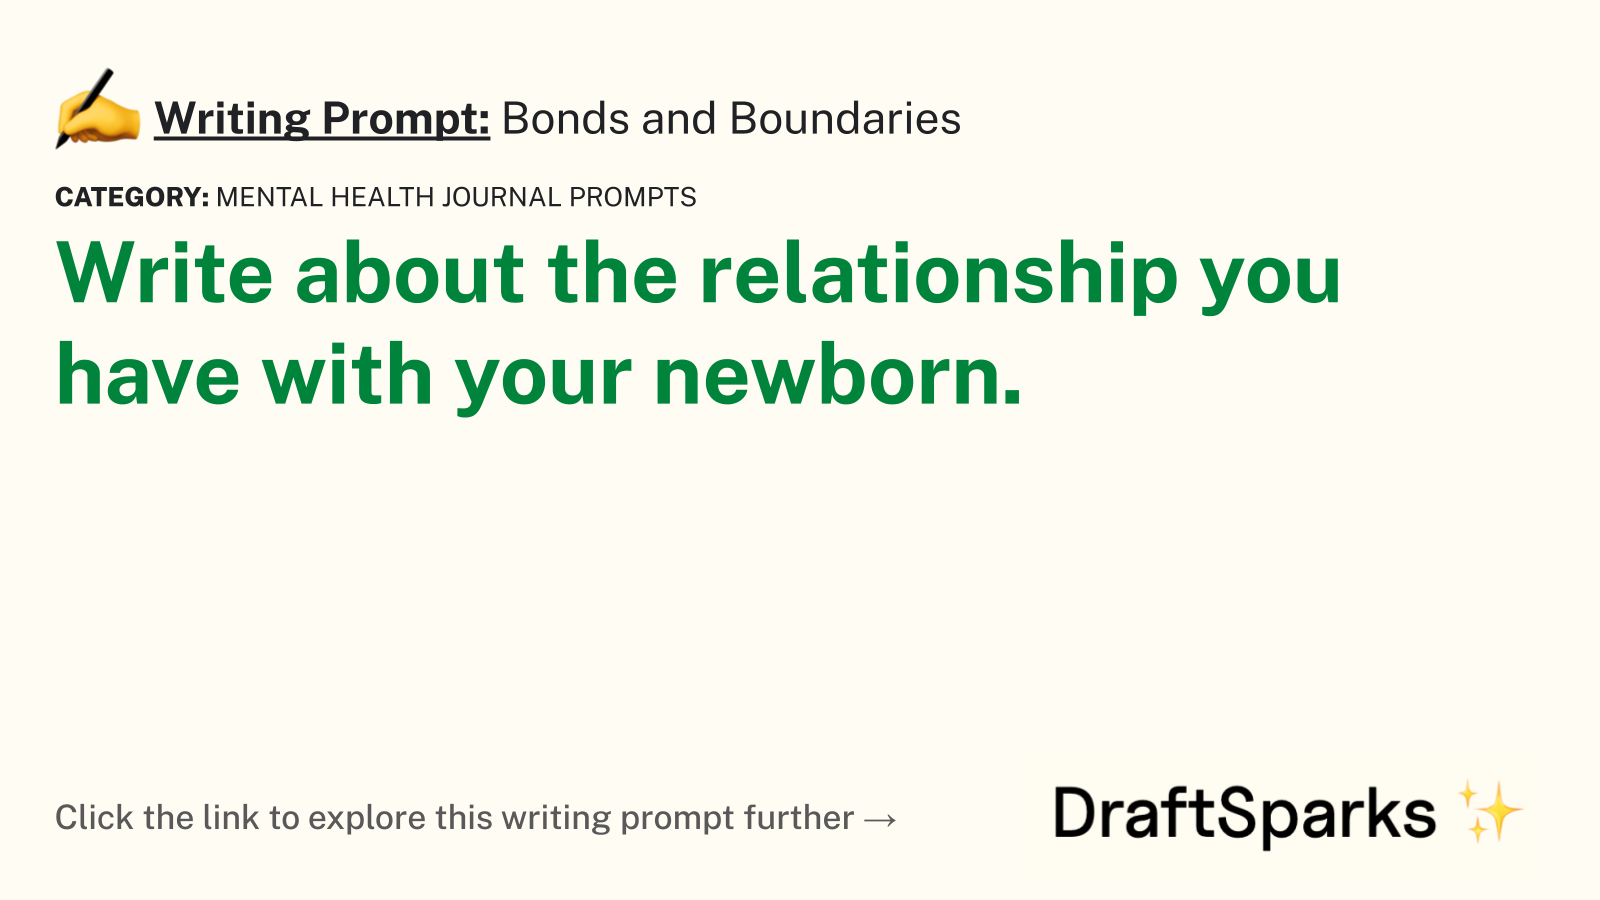 Bonds and Boundaries